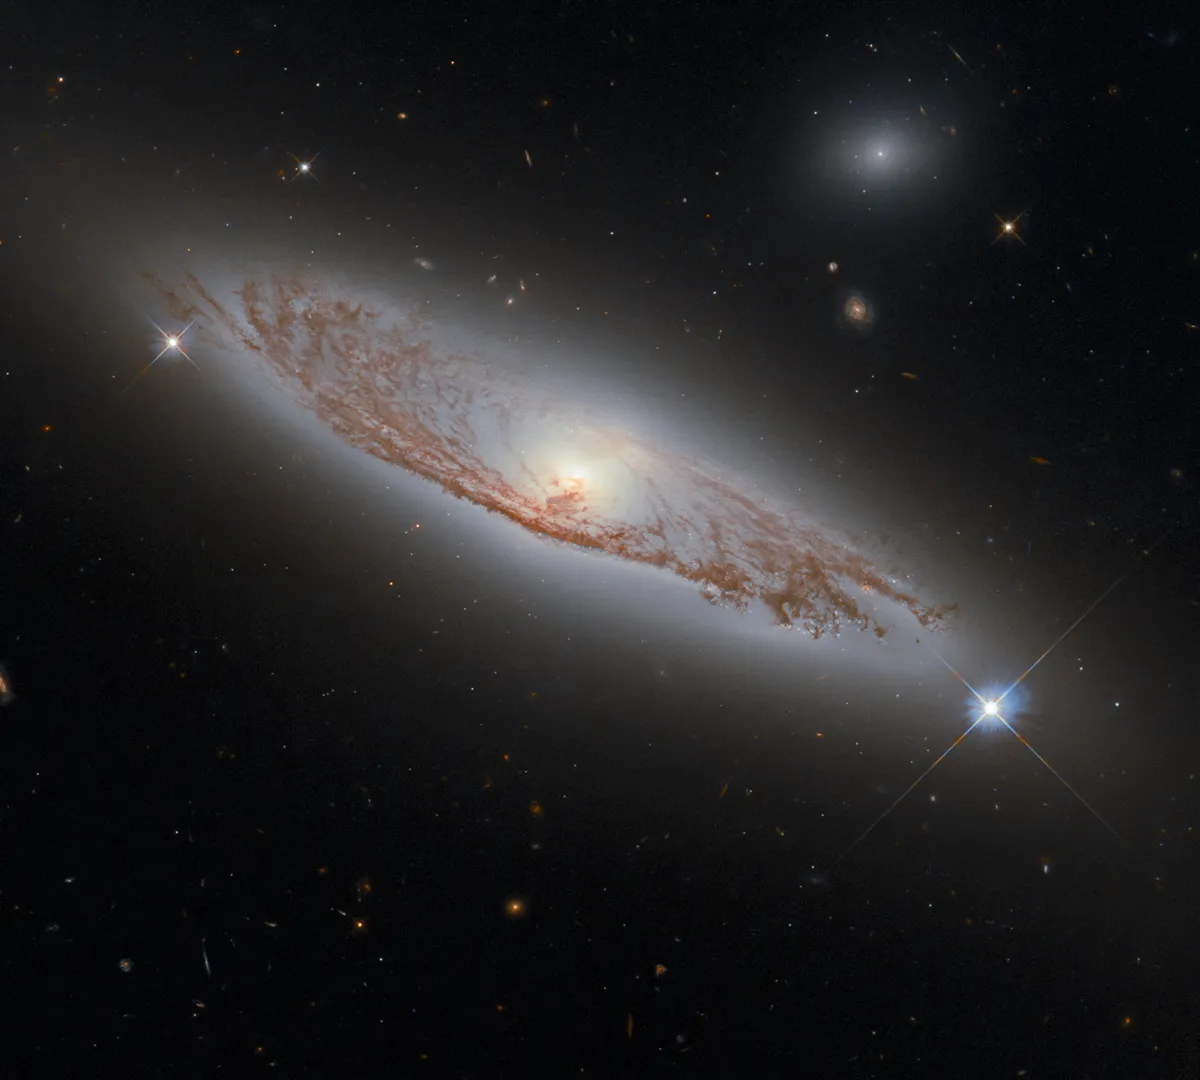 Delicate spiral galaxy NGC 5037 HUBBLE SPACE TELESCOPE, 24 MAY 2021 CREDIT: ESA/Hubble & NASA, D. Rosario. Acknowledgement: L. Shatz